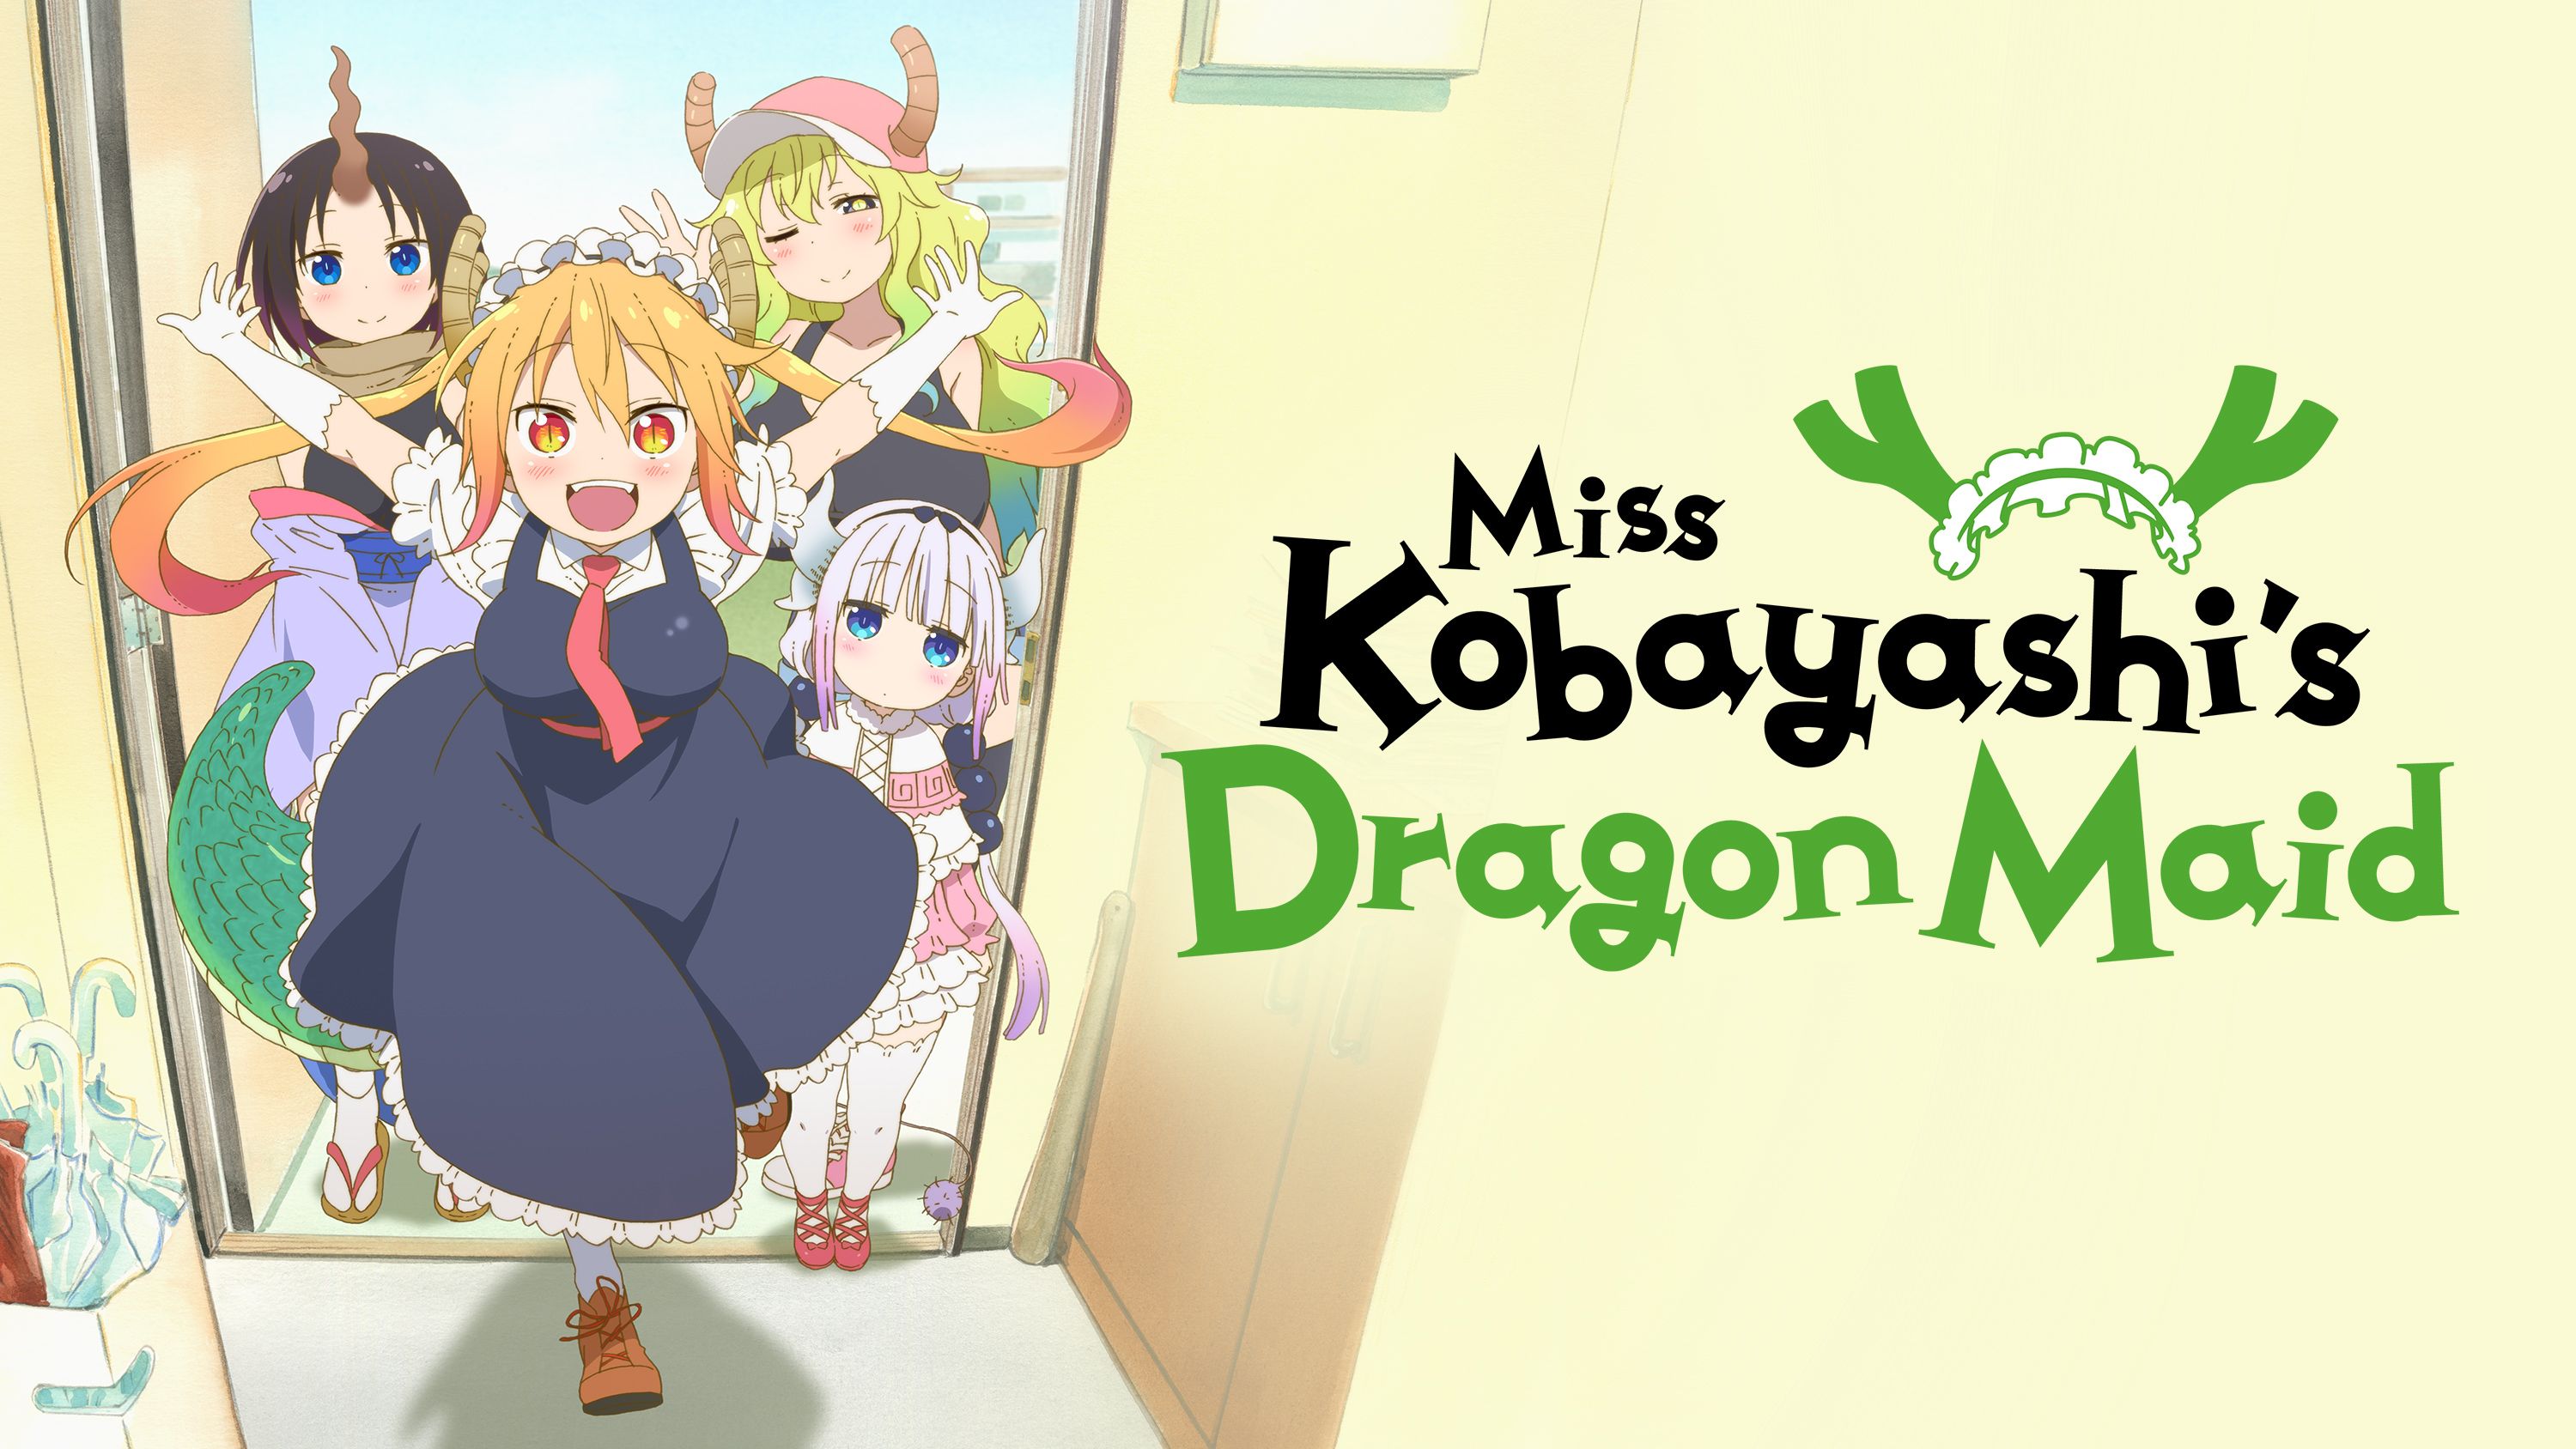 Image for the Kyoto Animation show. Miss Kobayashi Dragon Maid.